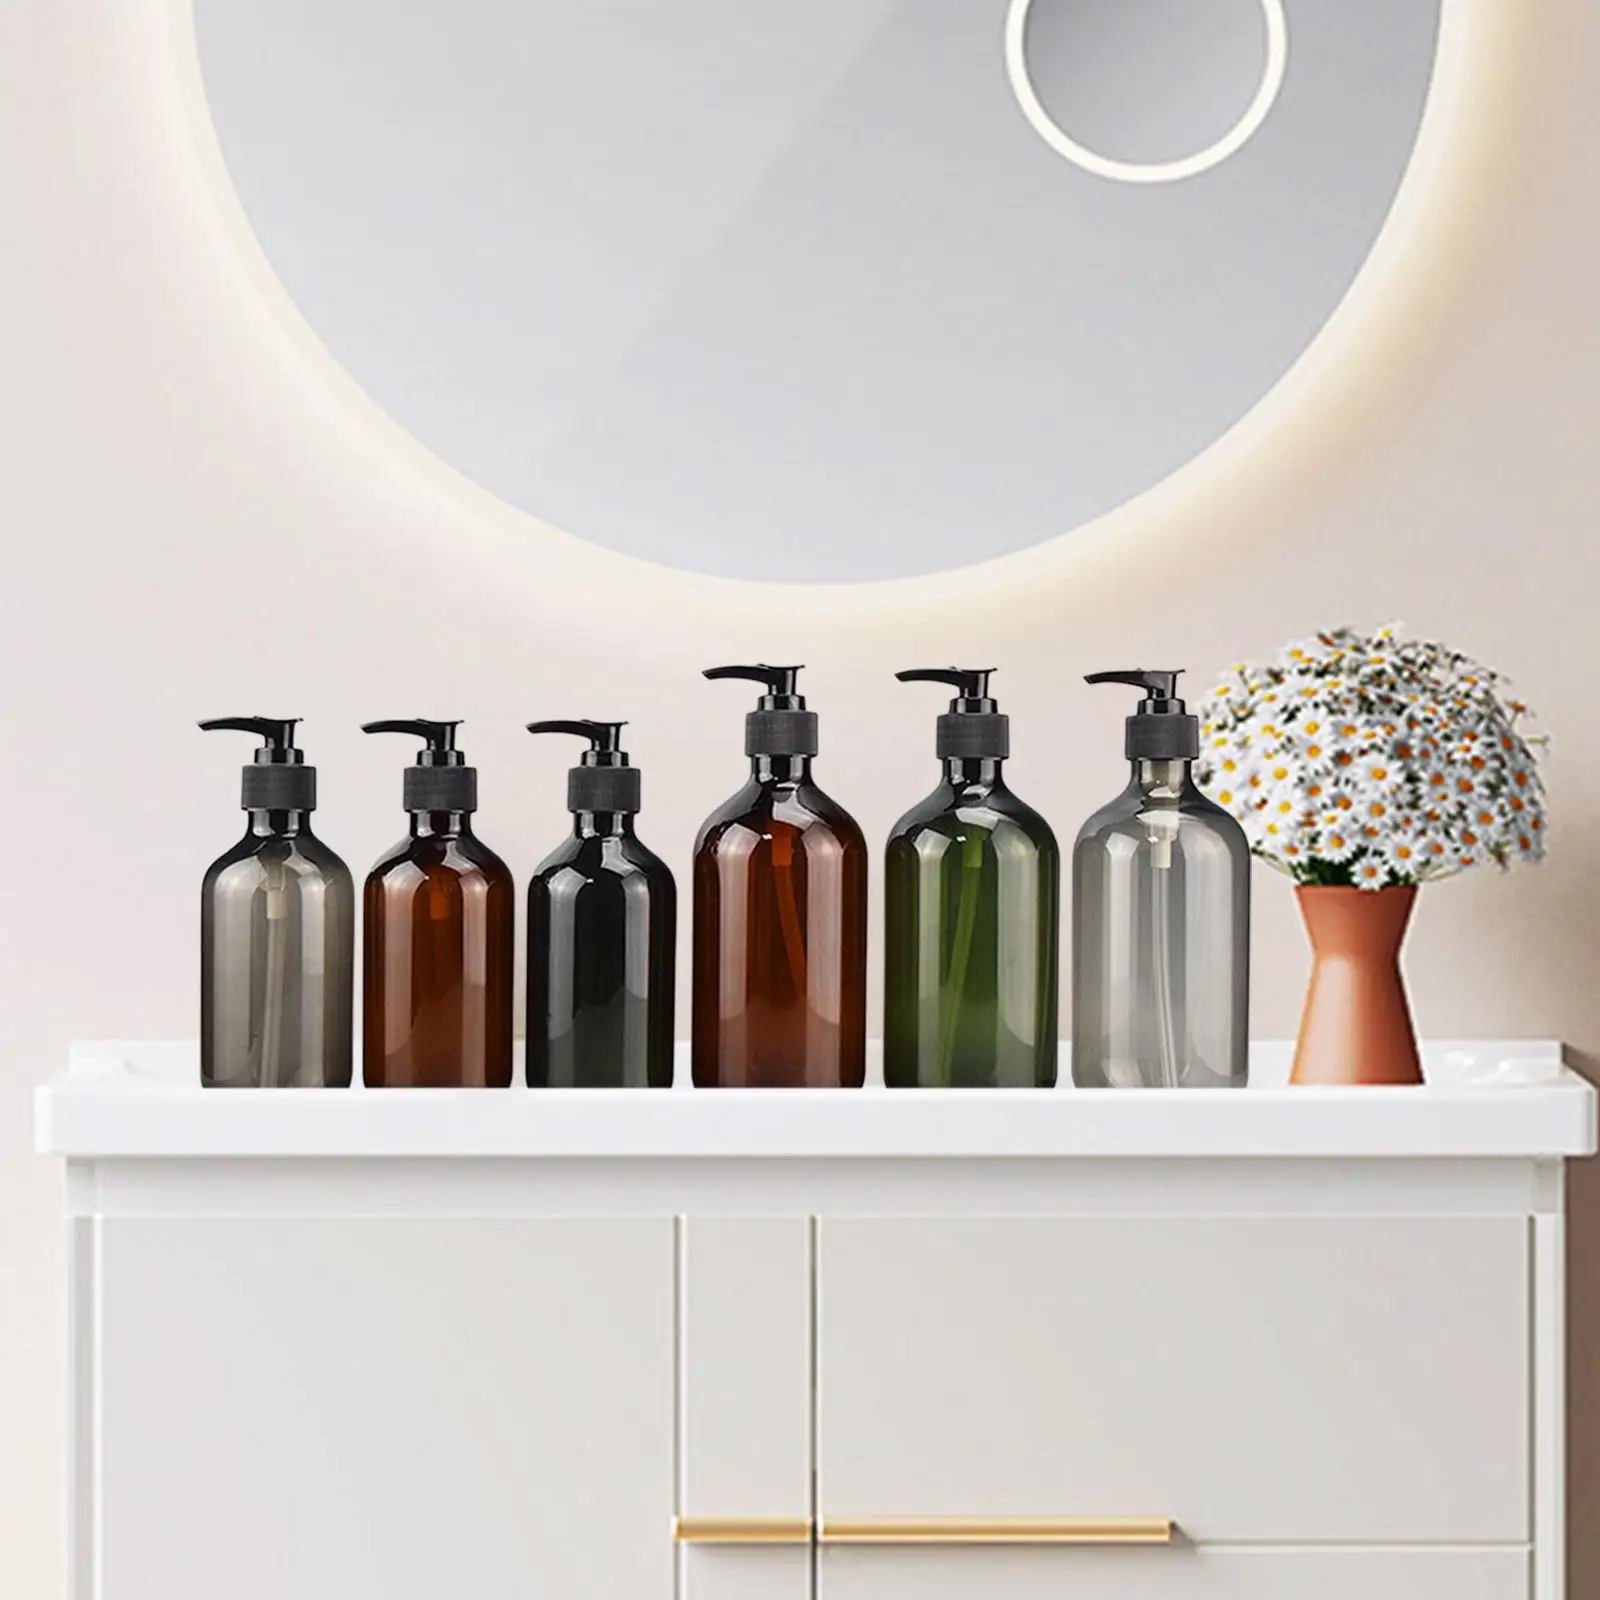 https://ae01.alicdn.com/kf/S8ca1d1bb5c7741199ee81bff2f8e98fcS/6-Pieces-Soap-Dispenser-with-Pumps-Lotion-Liquid-Bottle-Pump-Dispensers-for-Bathroom-Accessories-Hotel-Home.jpg